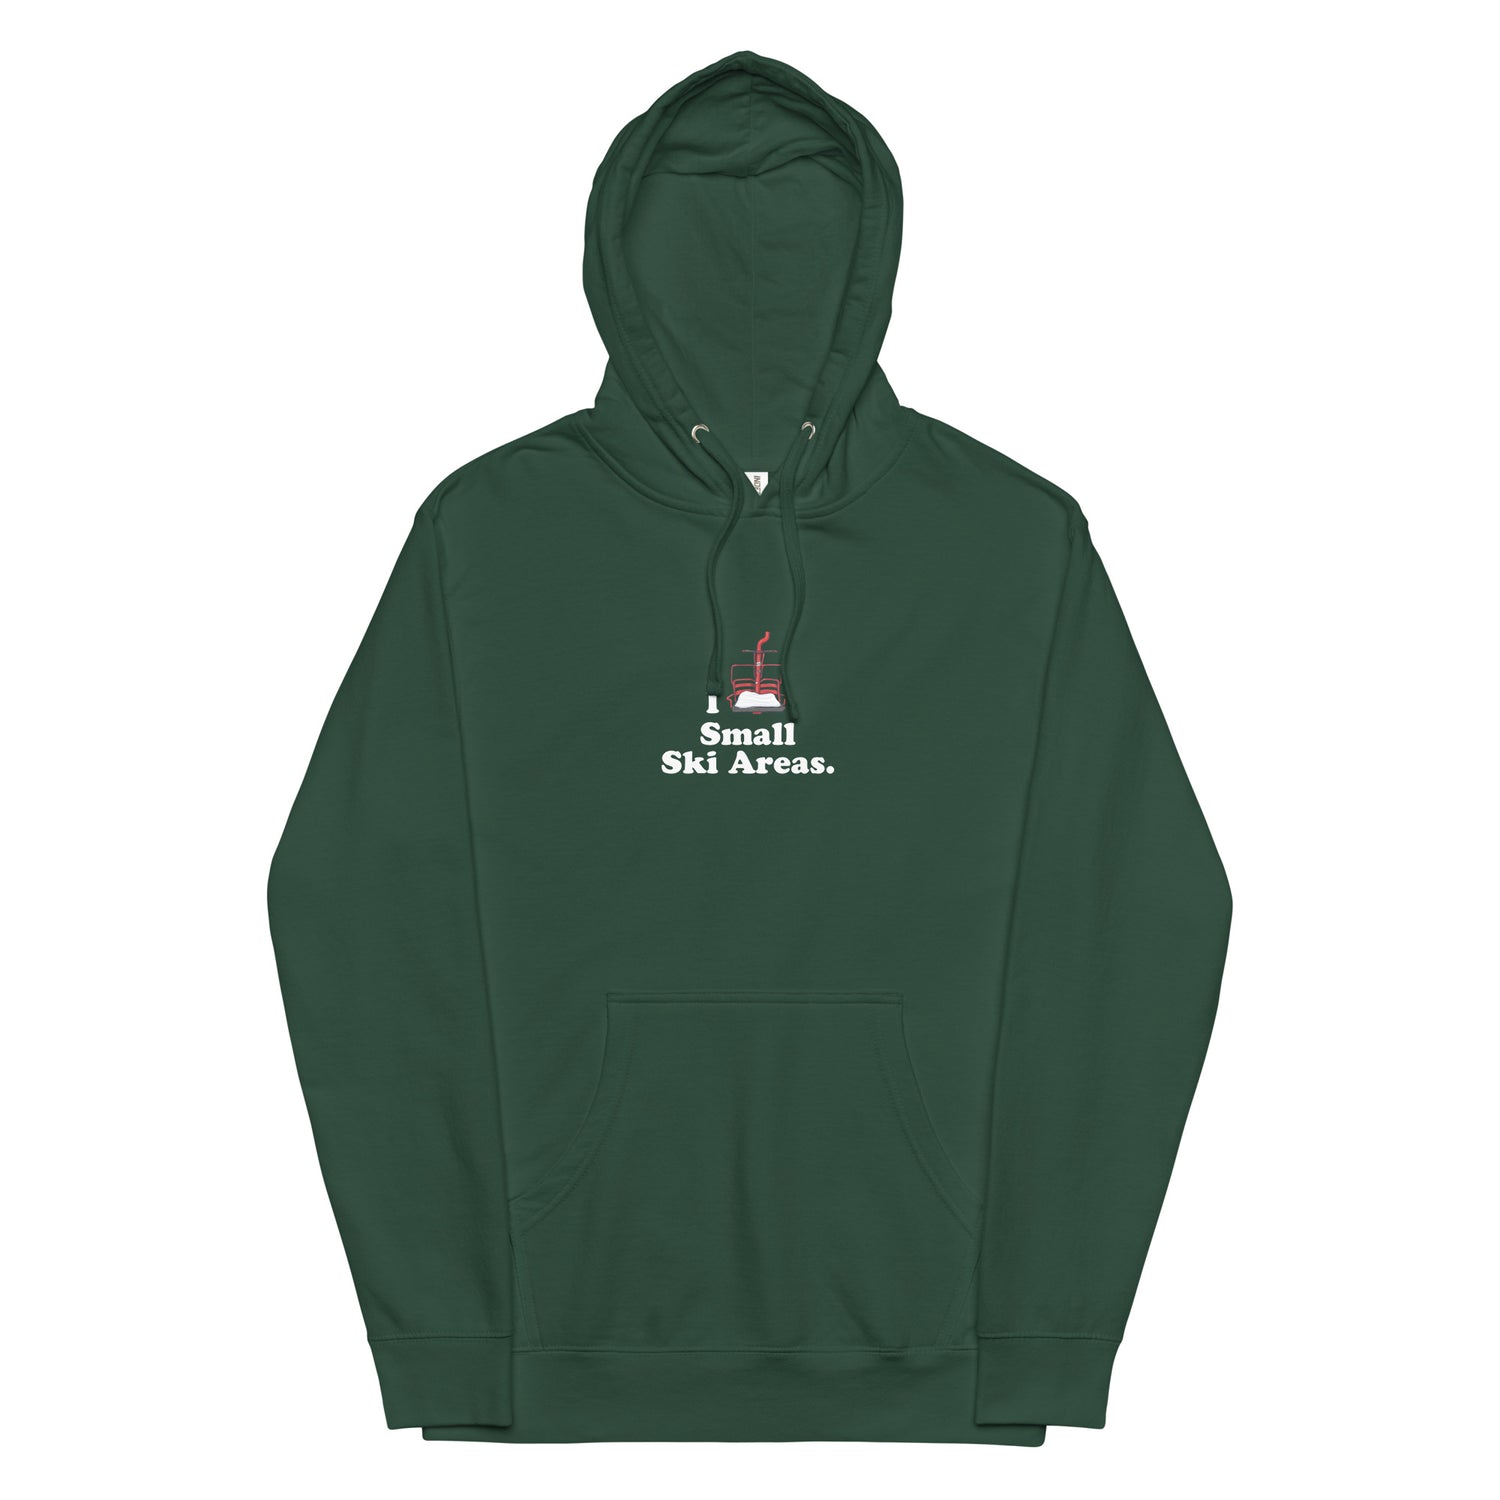 Green unisex hooded sweatshirt with playful ski-themed slogan